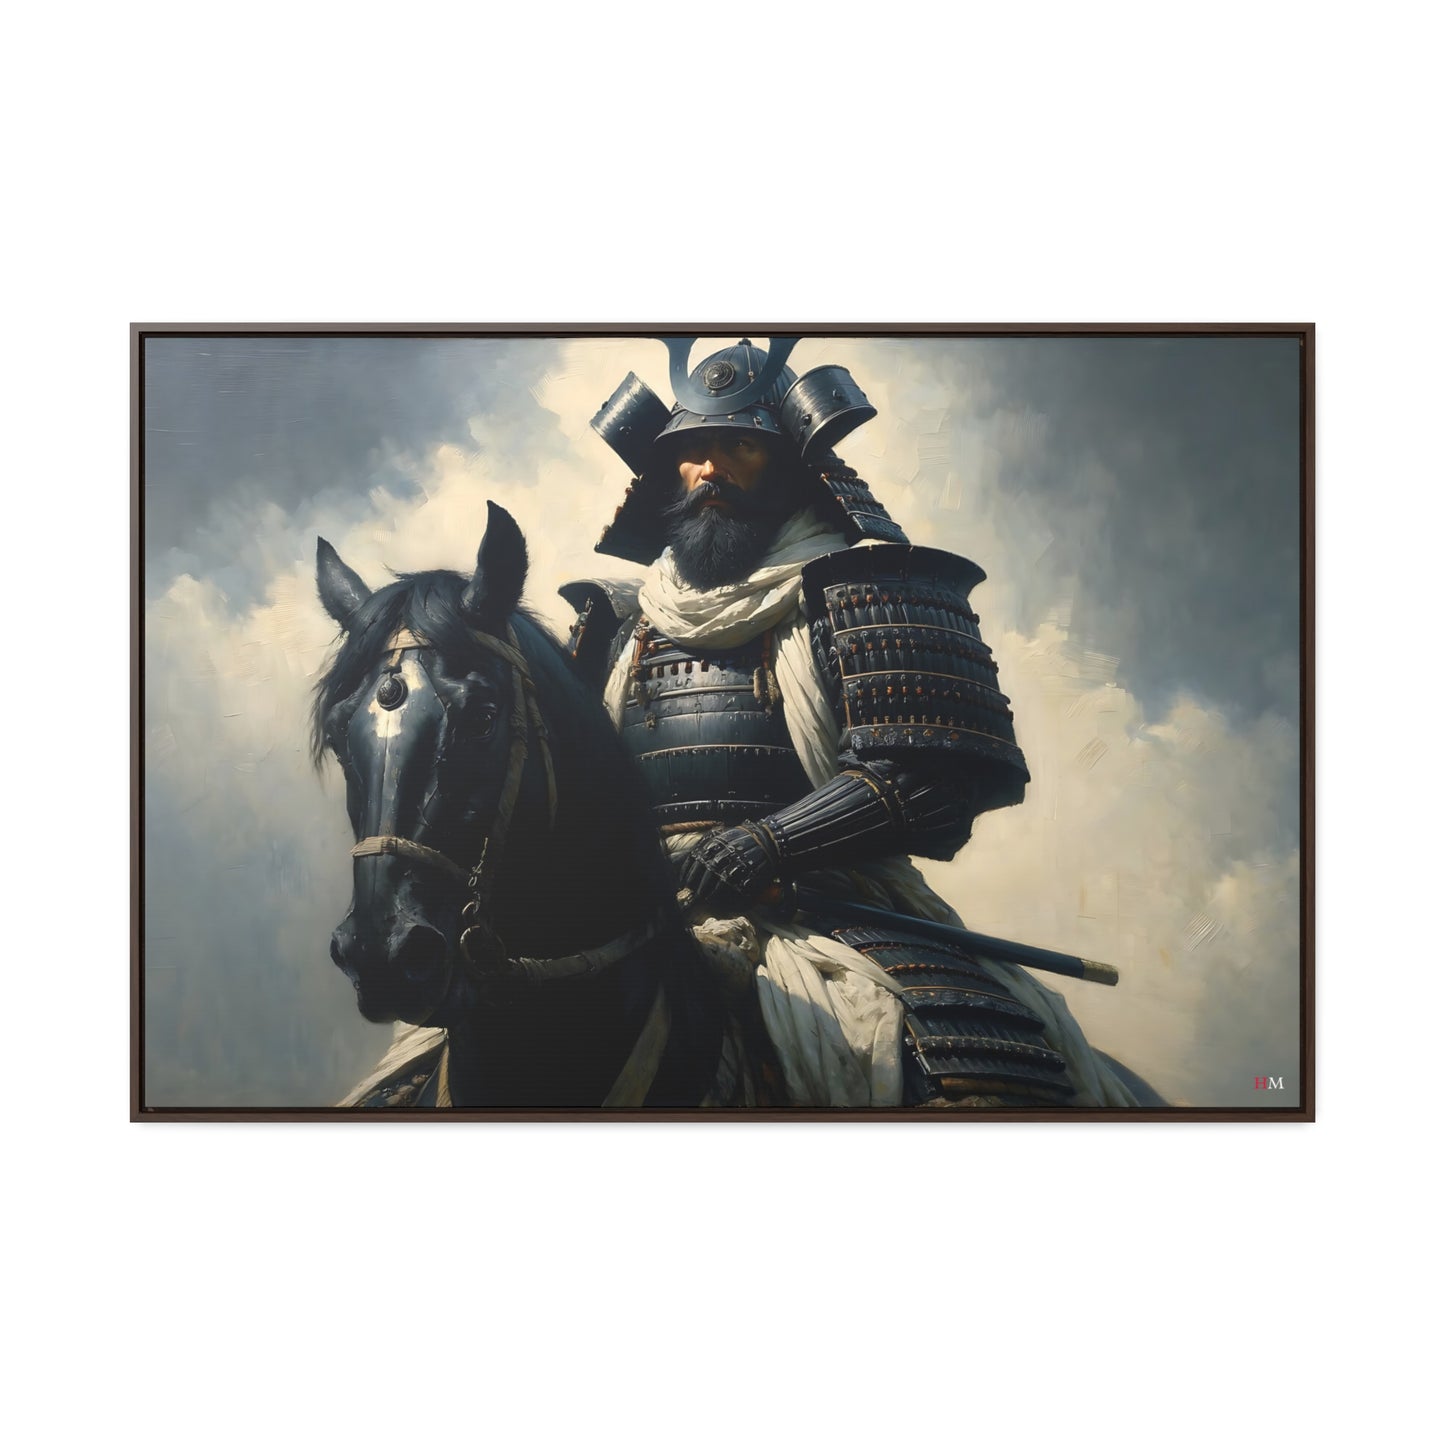 Uesugi Kenshin Dragon of Echigo Samurai Gallery Canvas Painting Wraps, Horizontal Frame